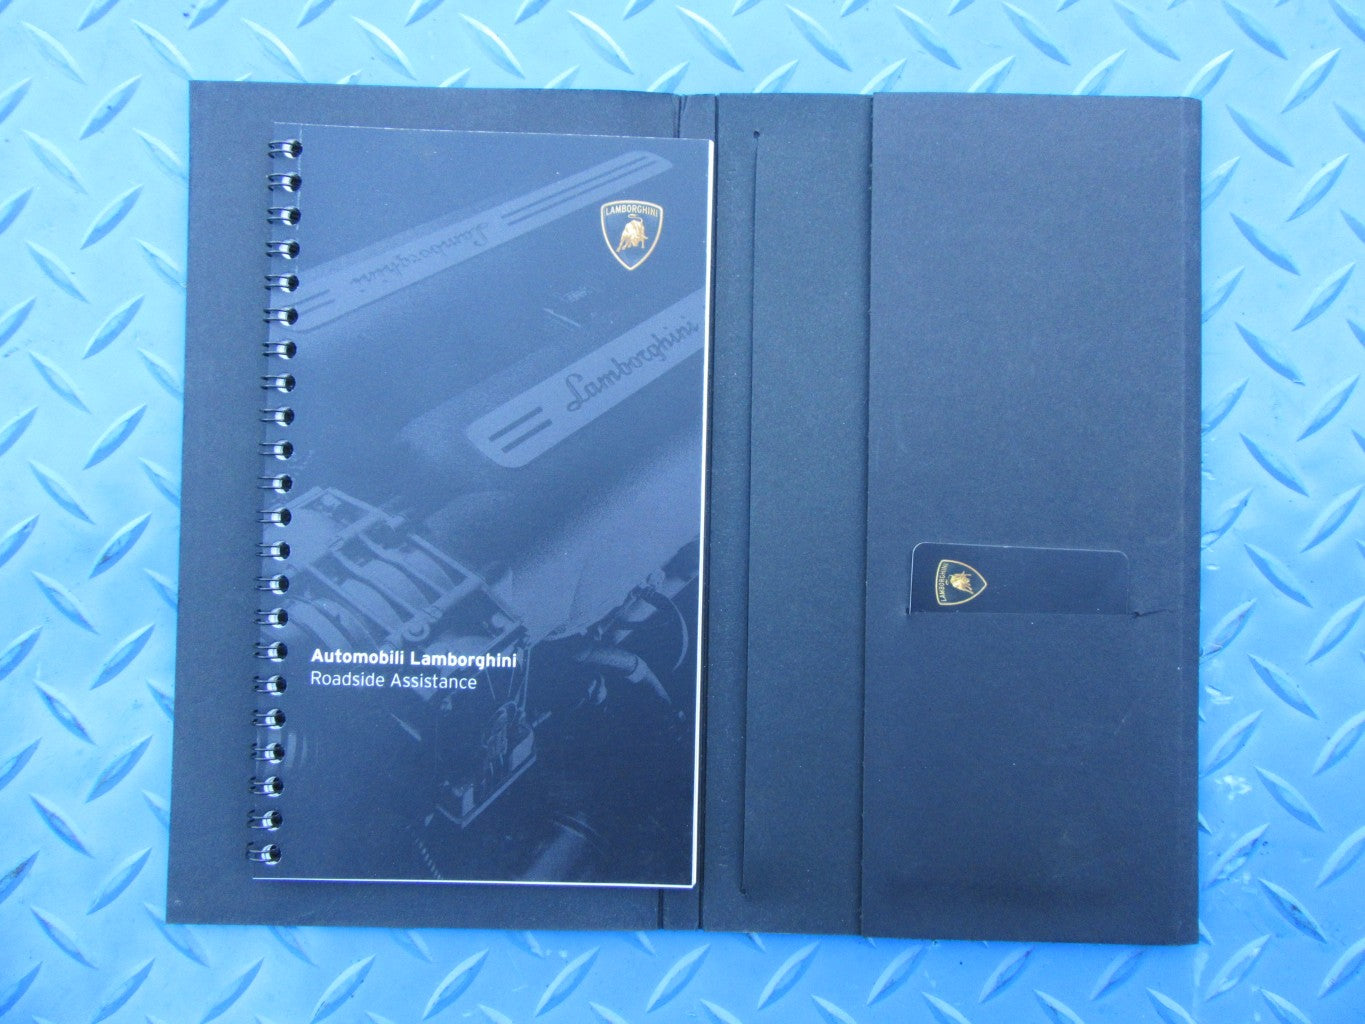 Lamborghini Murcielago LP640 owners handbook roadside maintenance manuals with pouch #2600